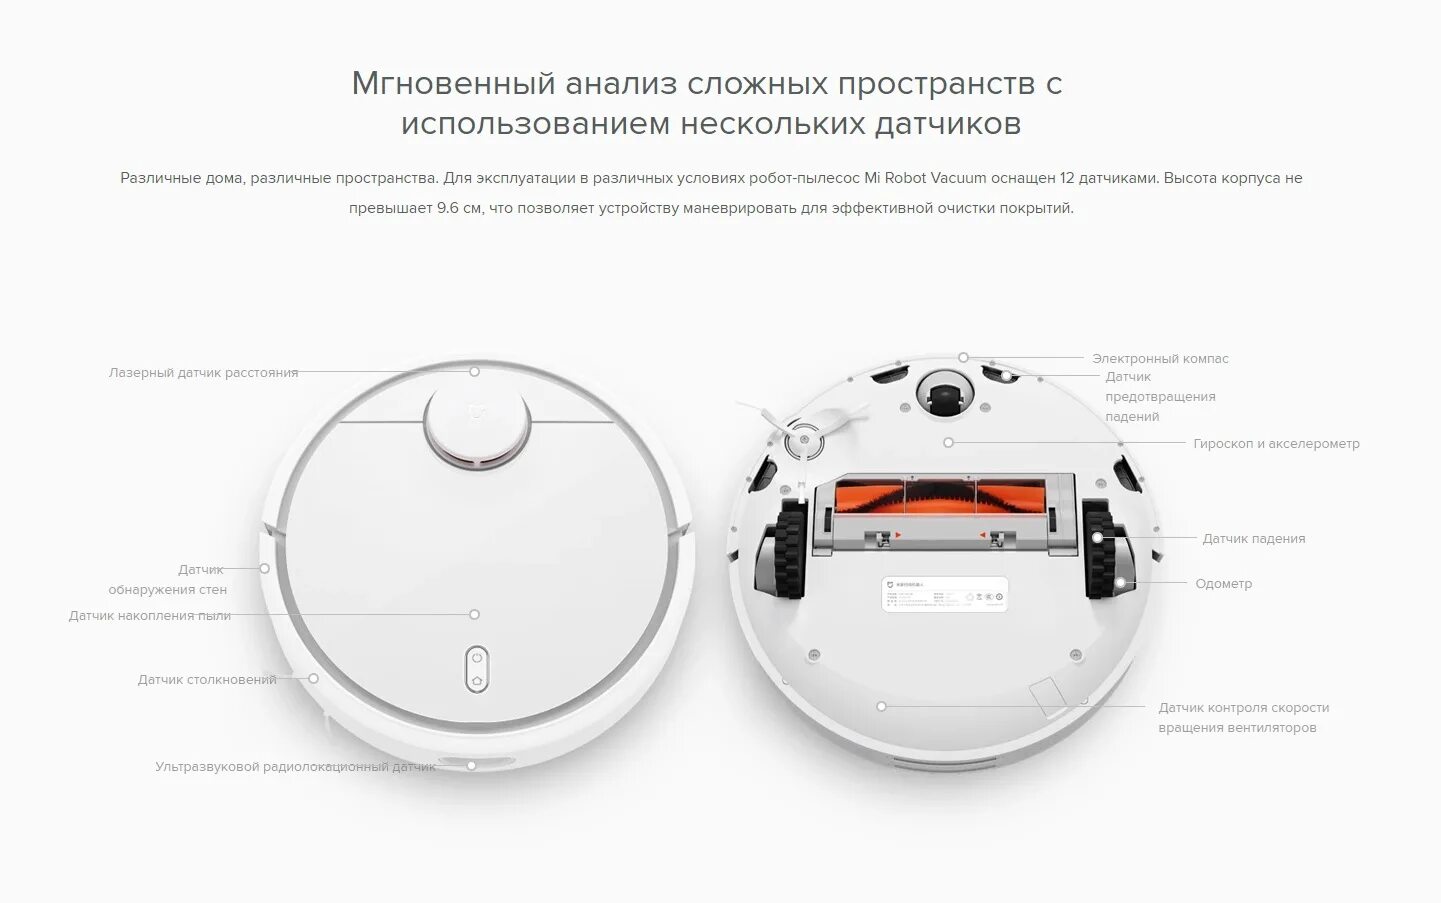 Robot Vacuum Cleaner sdjqr02rr. Xiaomi Mijia Robot Vacuum Cleaner White (sdjqr01rr) (sdjqr02rr). Xiaomi mi Robot Vacuum 1 корпус. Датчик ЛДС робот пылесос.